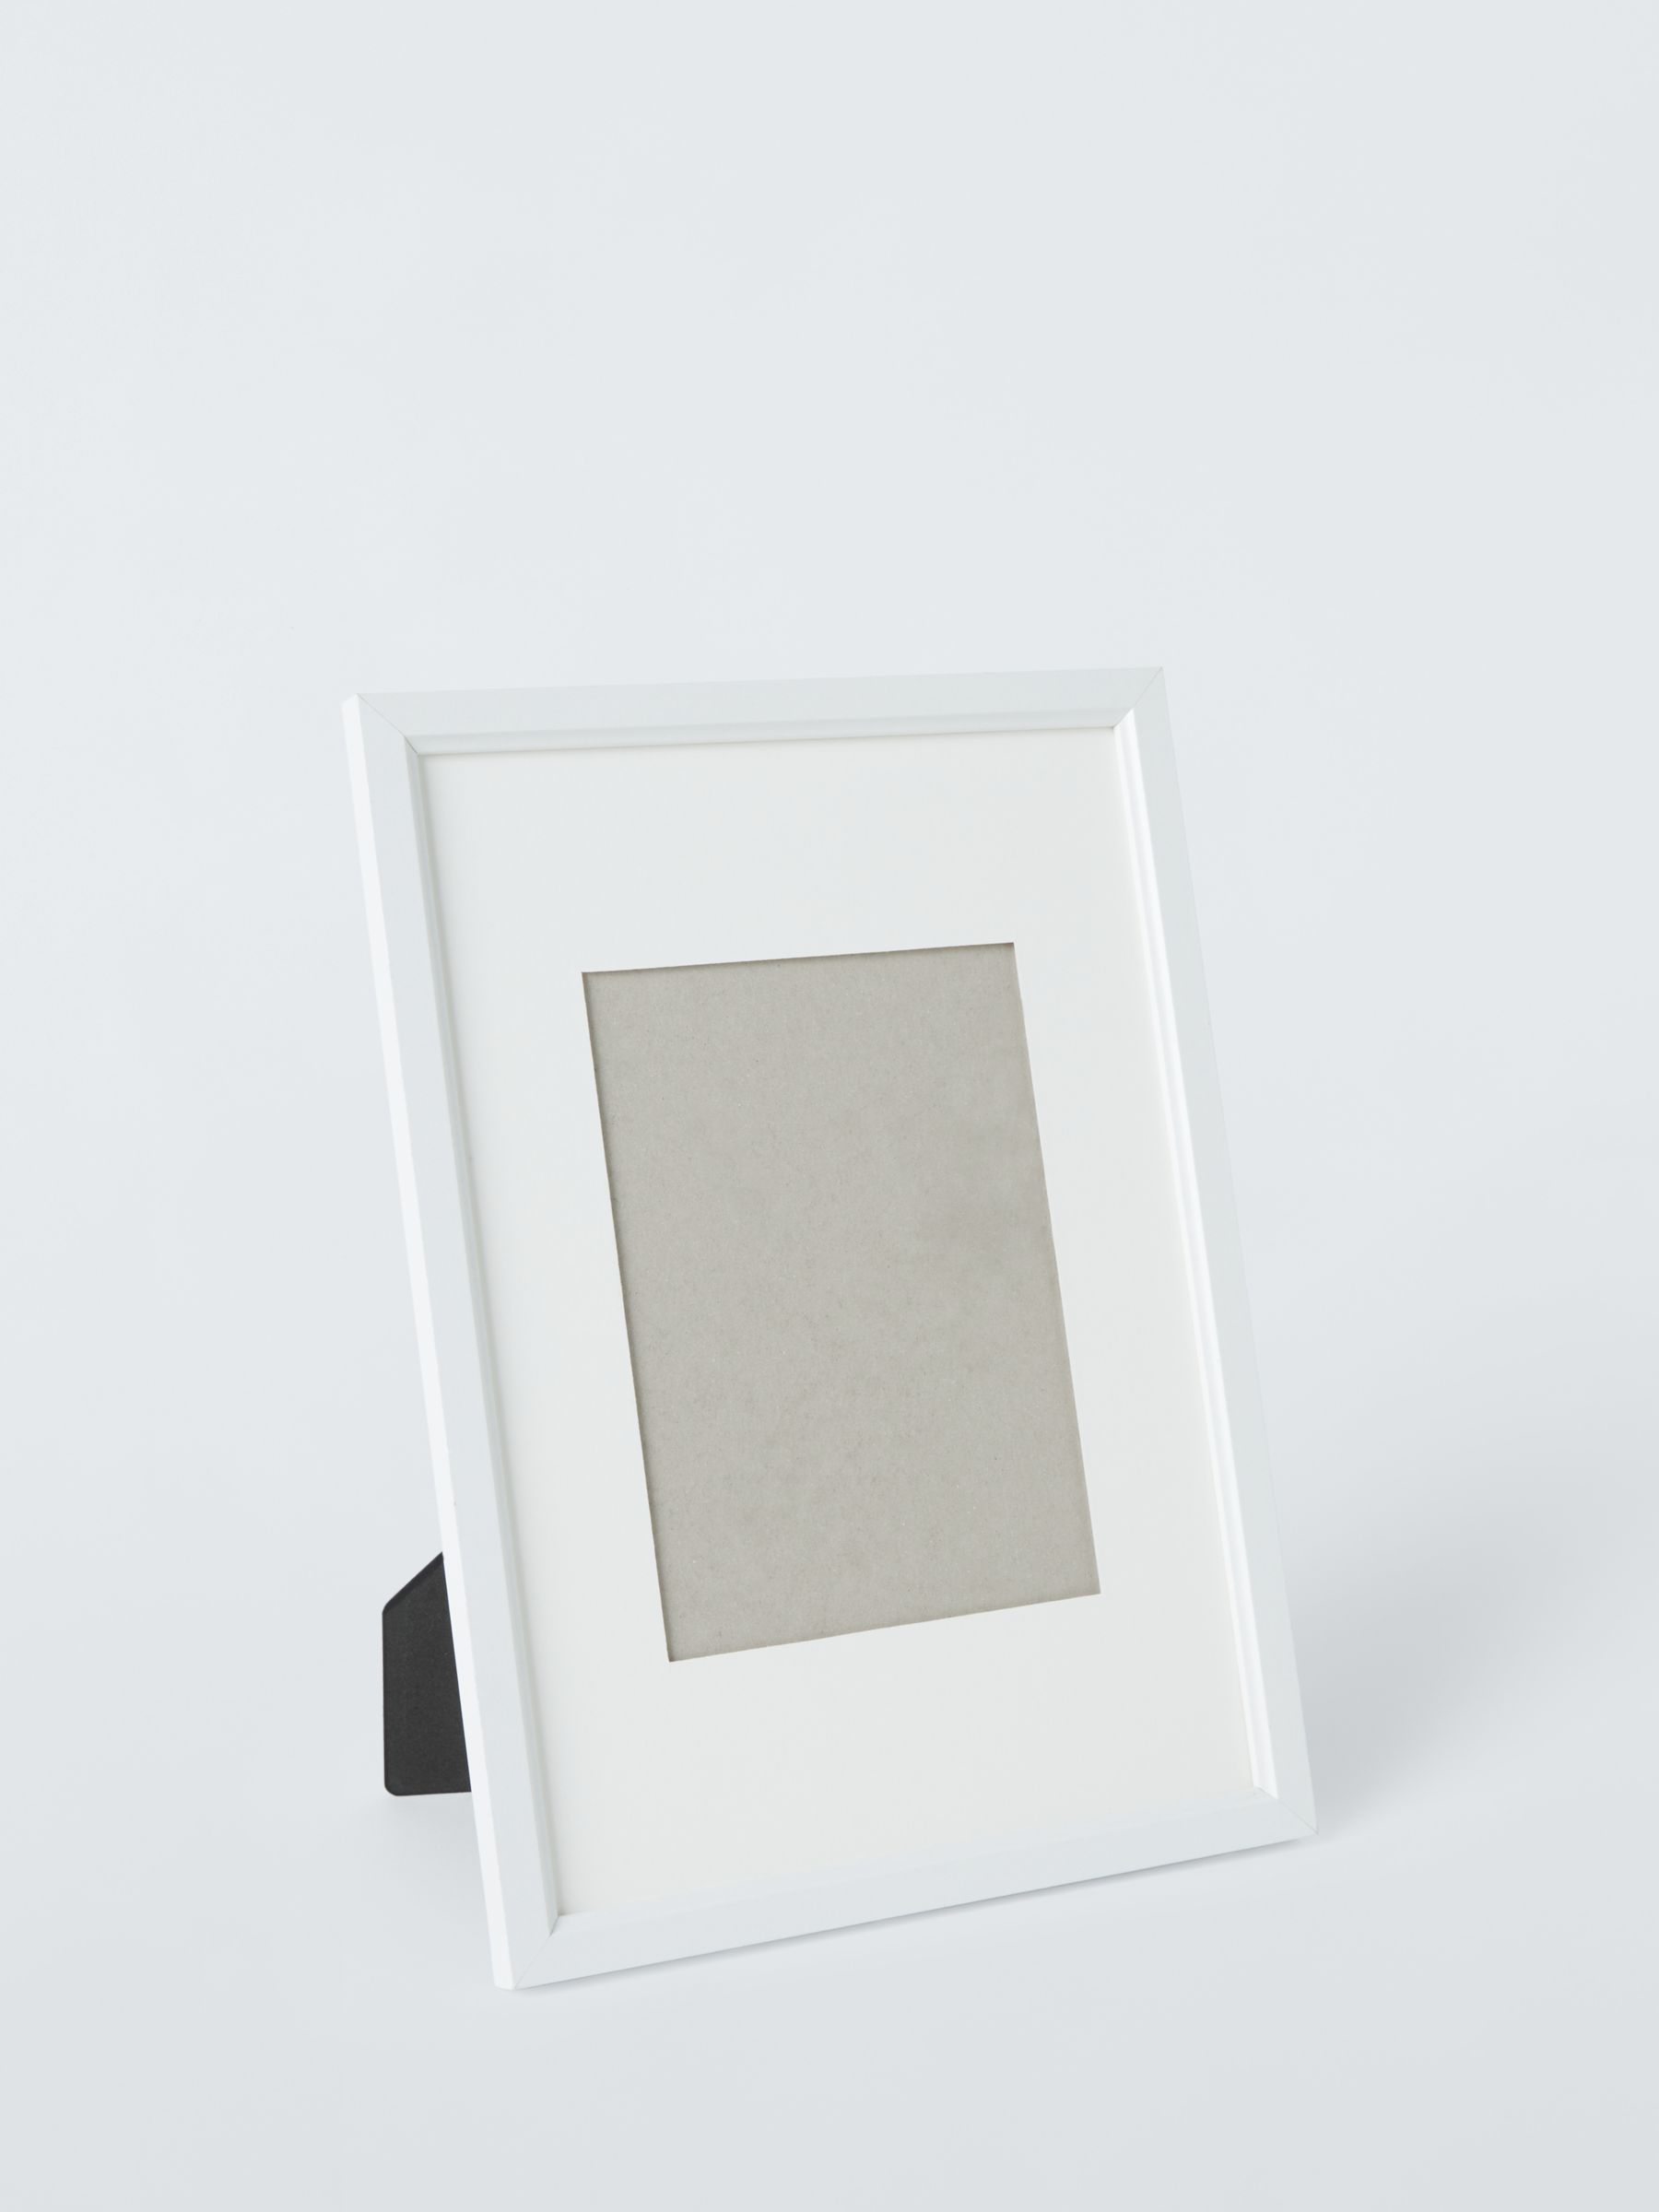 nielsen Plain Photo Mount, 5 x 7" (13 x 18cm) for A4 Frame, White